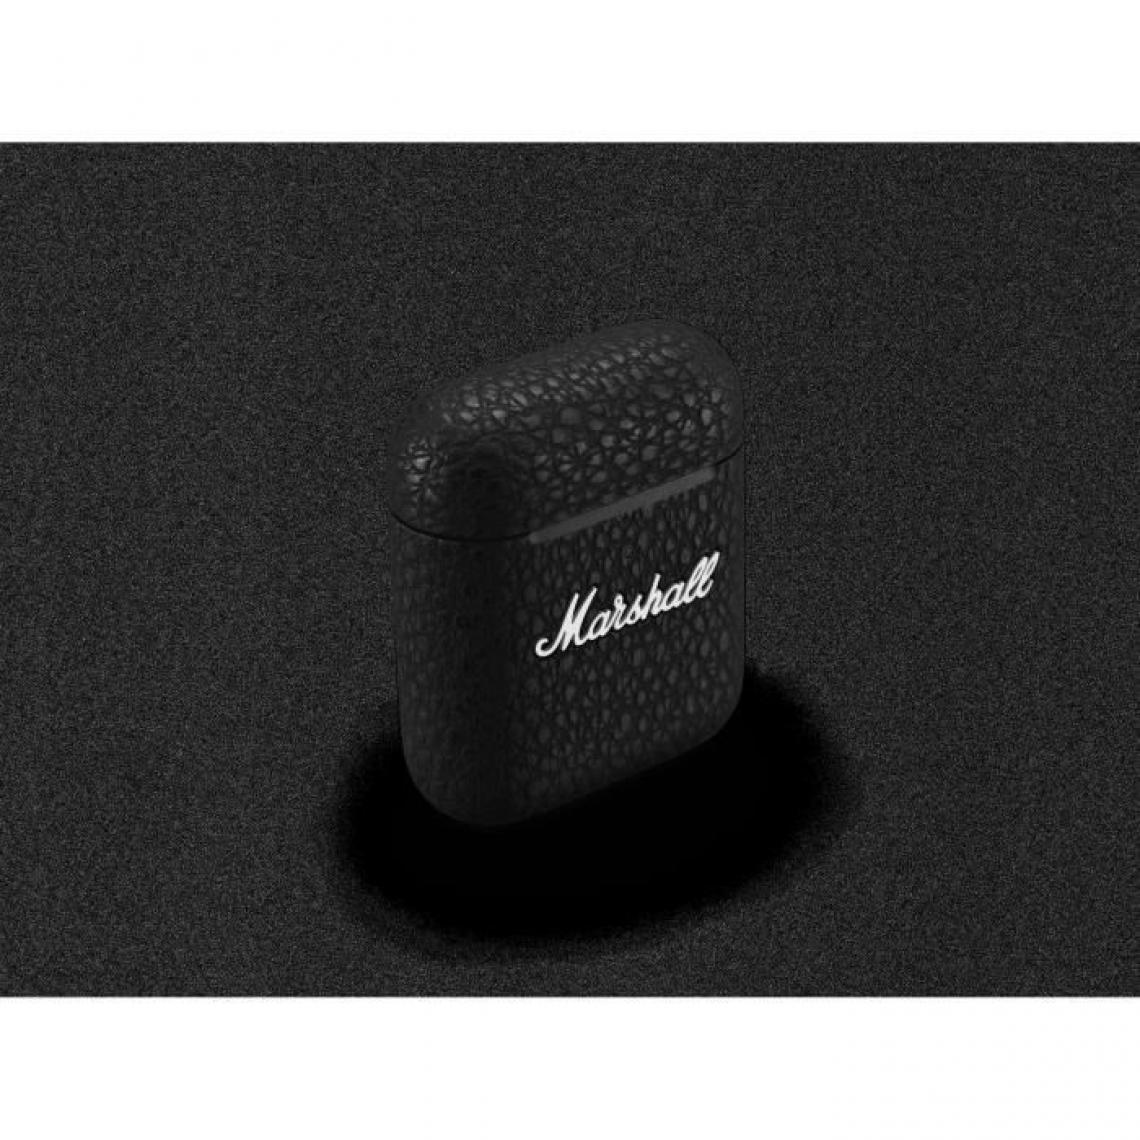 Marshall - MARSHALL HEADPHONES Minor III True Wireless Ecouteurs sans fil - Bluetooth - Noir - Ecouteurs intra-auriculaires